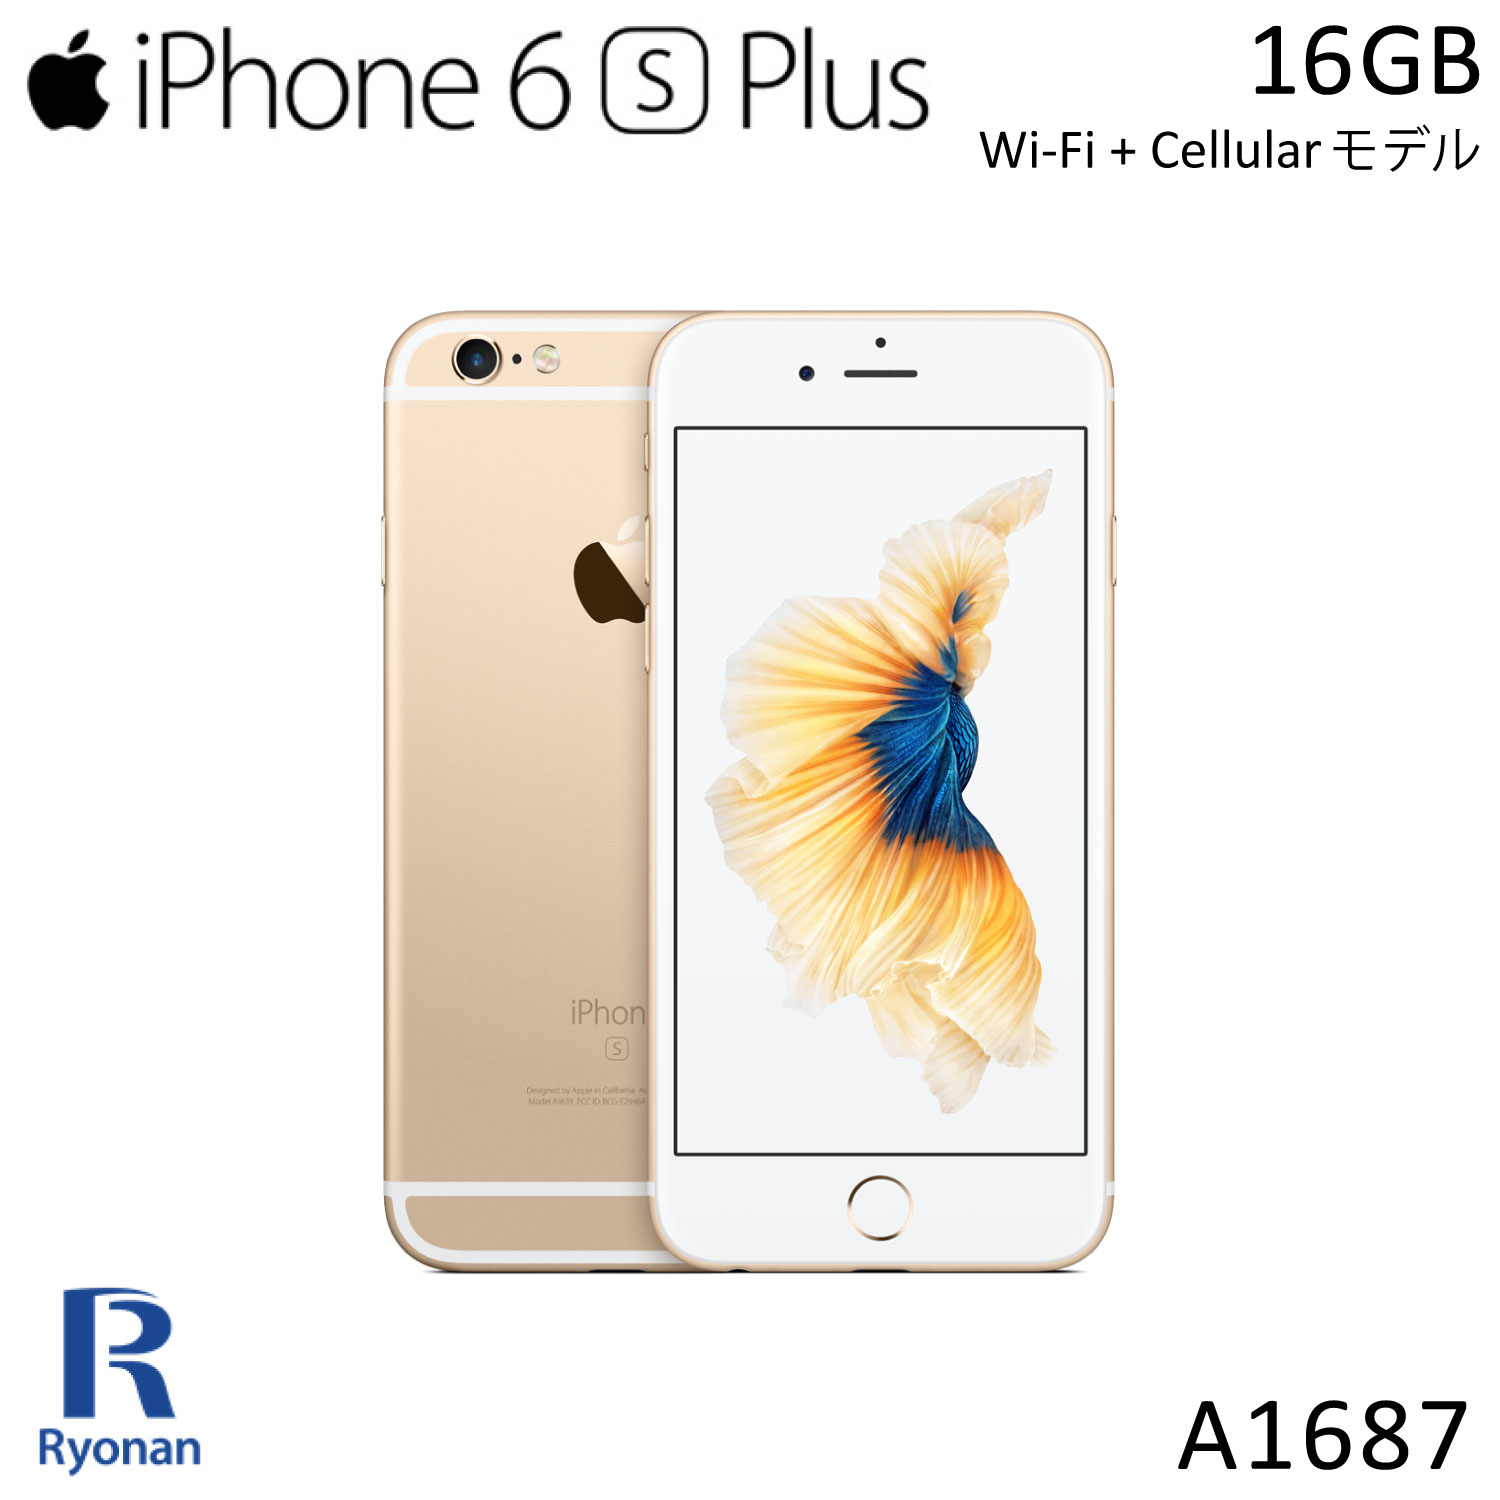 iPhone 6 GOLD 16GB SIMフリー | studdy.in